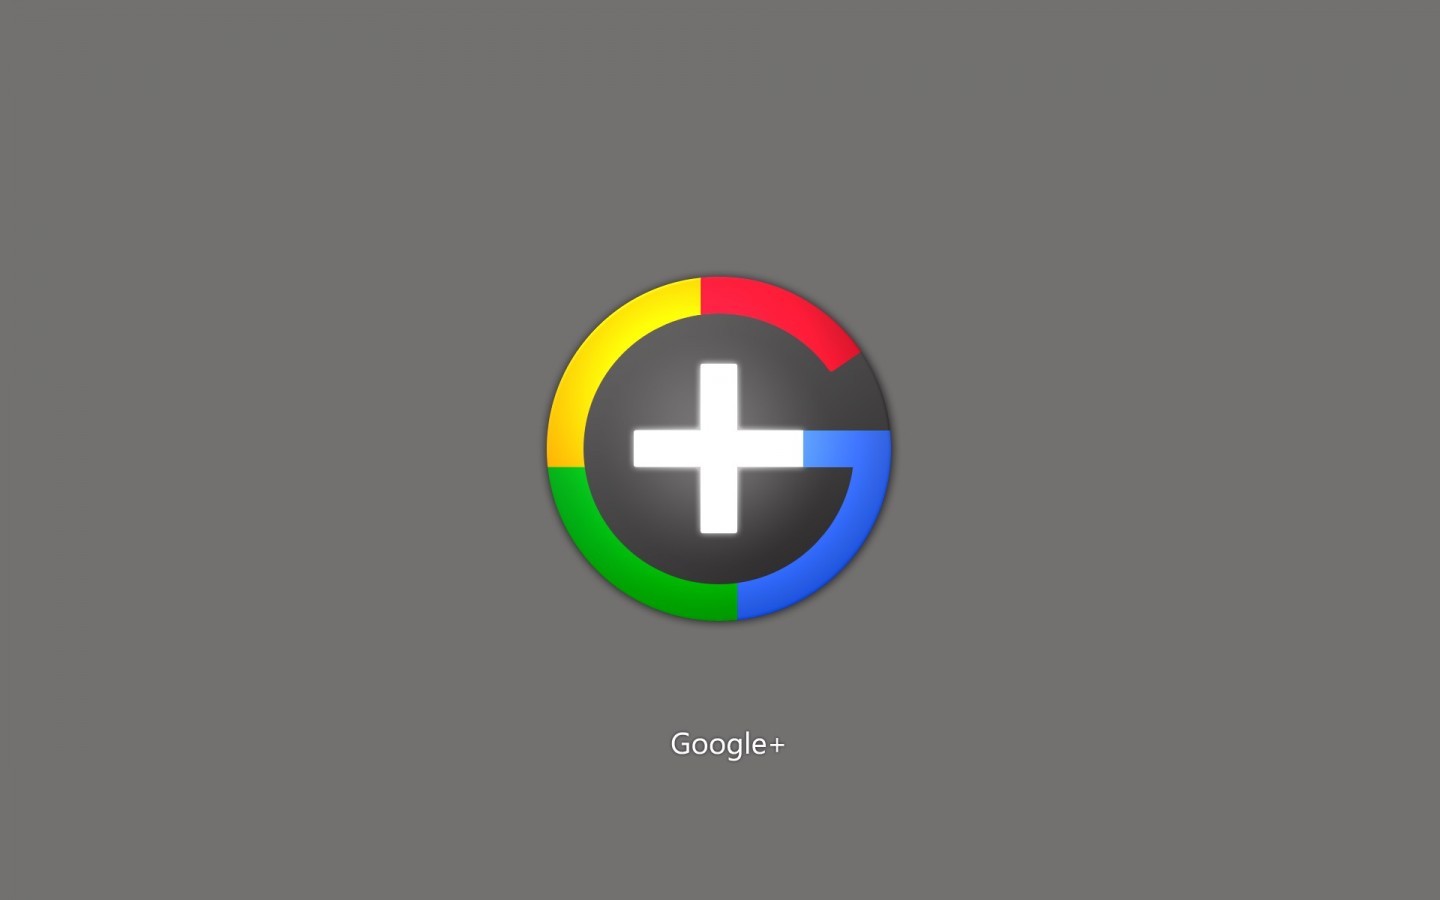 google, logos, brands, background, gray